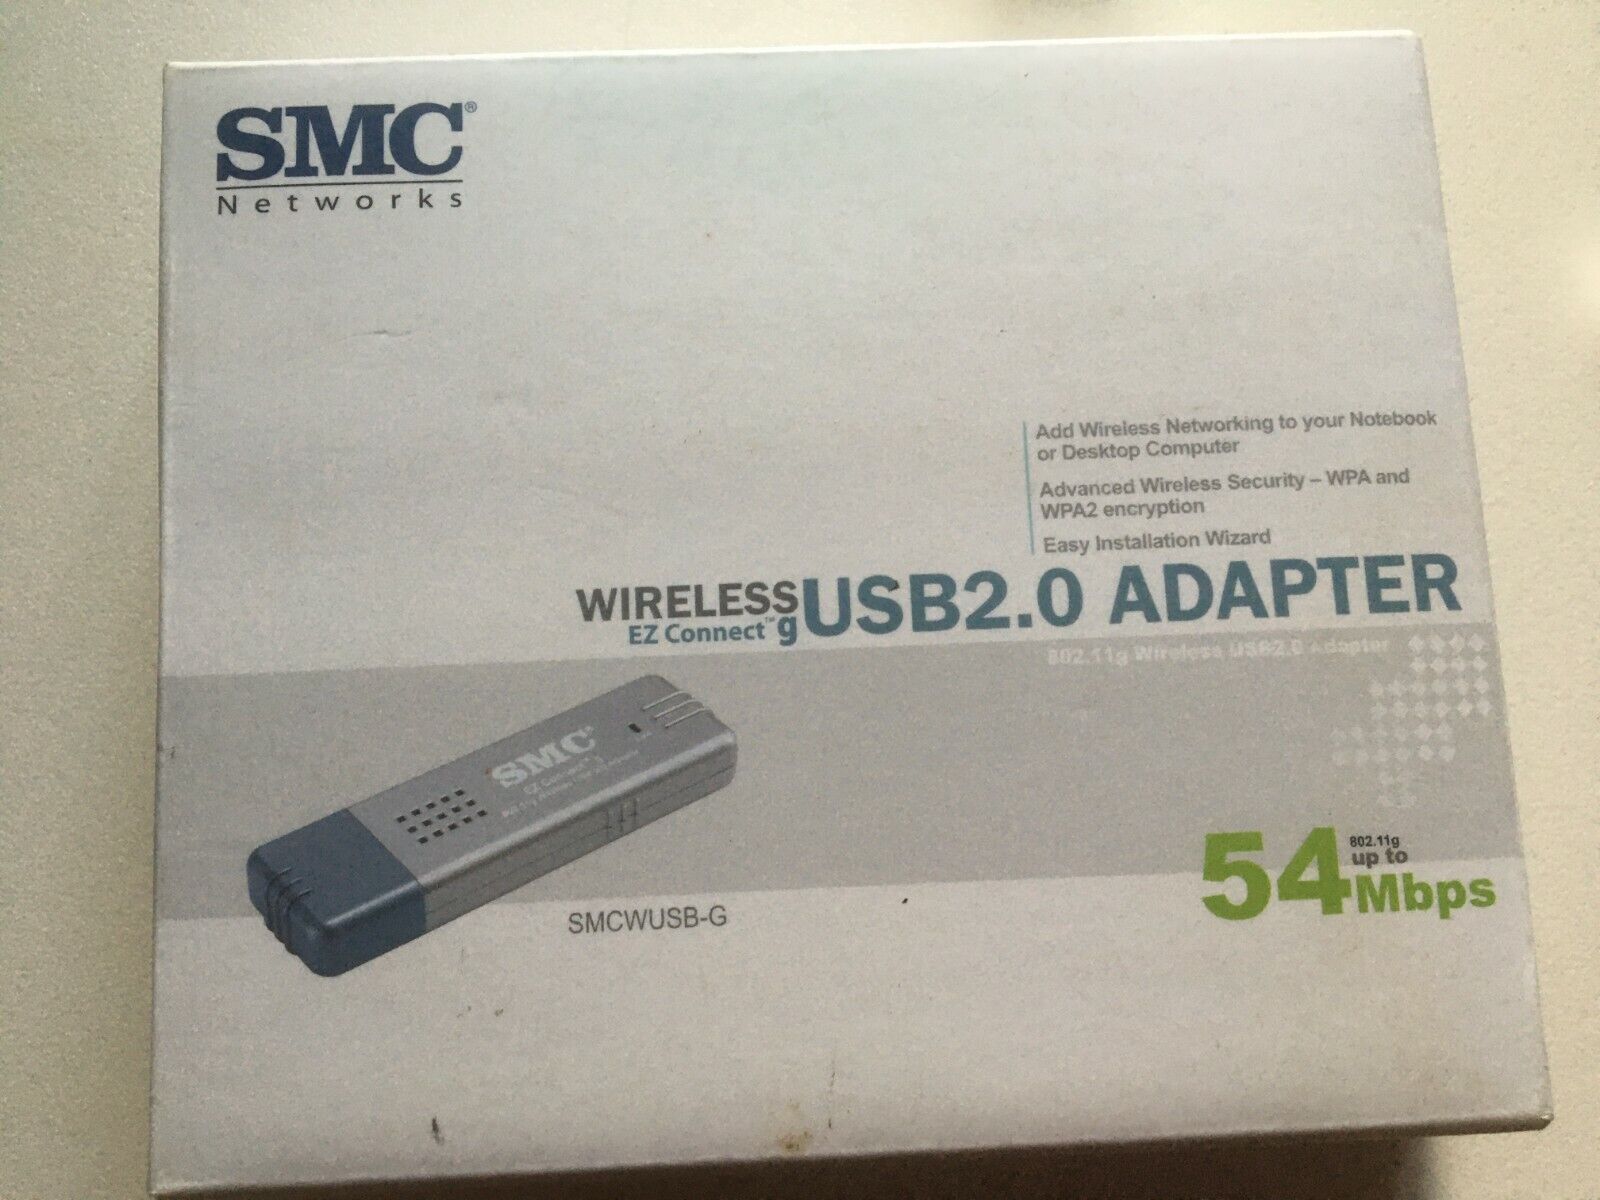 SMC SMCWUSB-G WIRELESS EZ Connect G USB 2.0 ADAPTER 54Mbps NEW